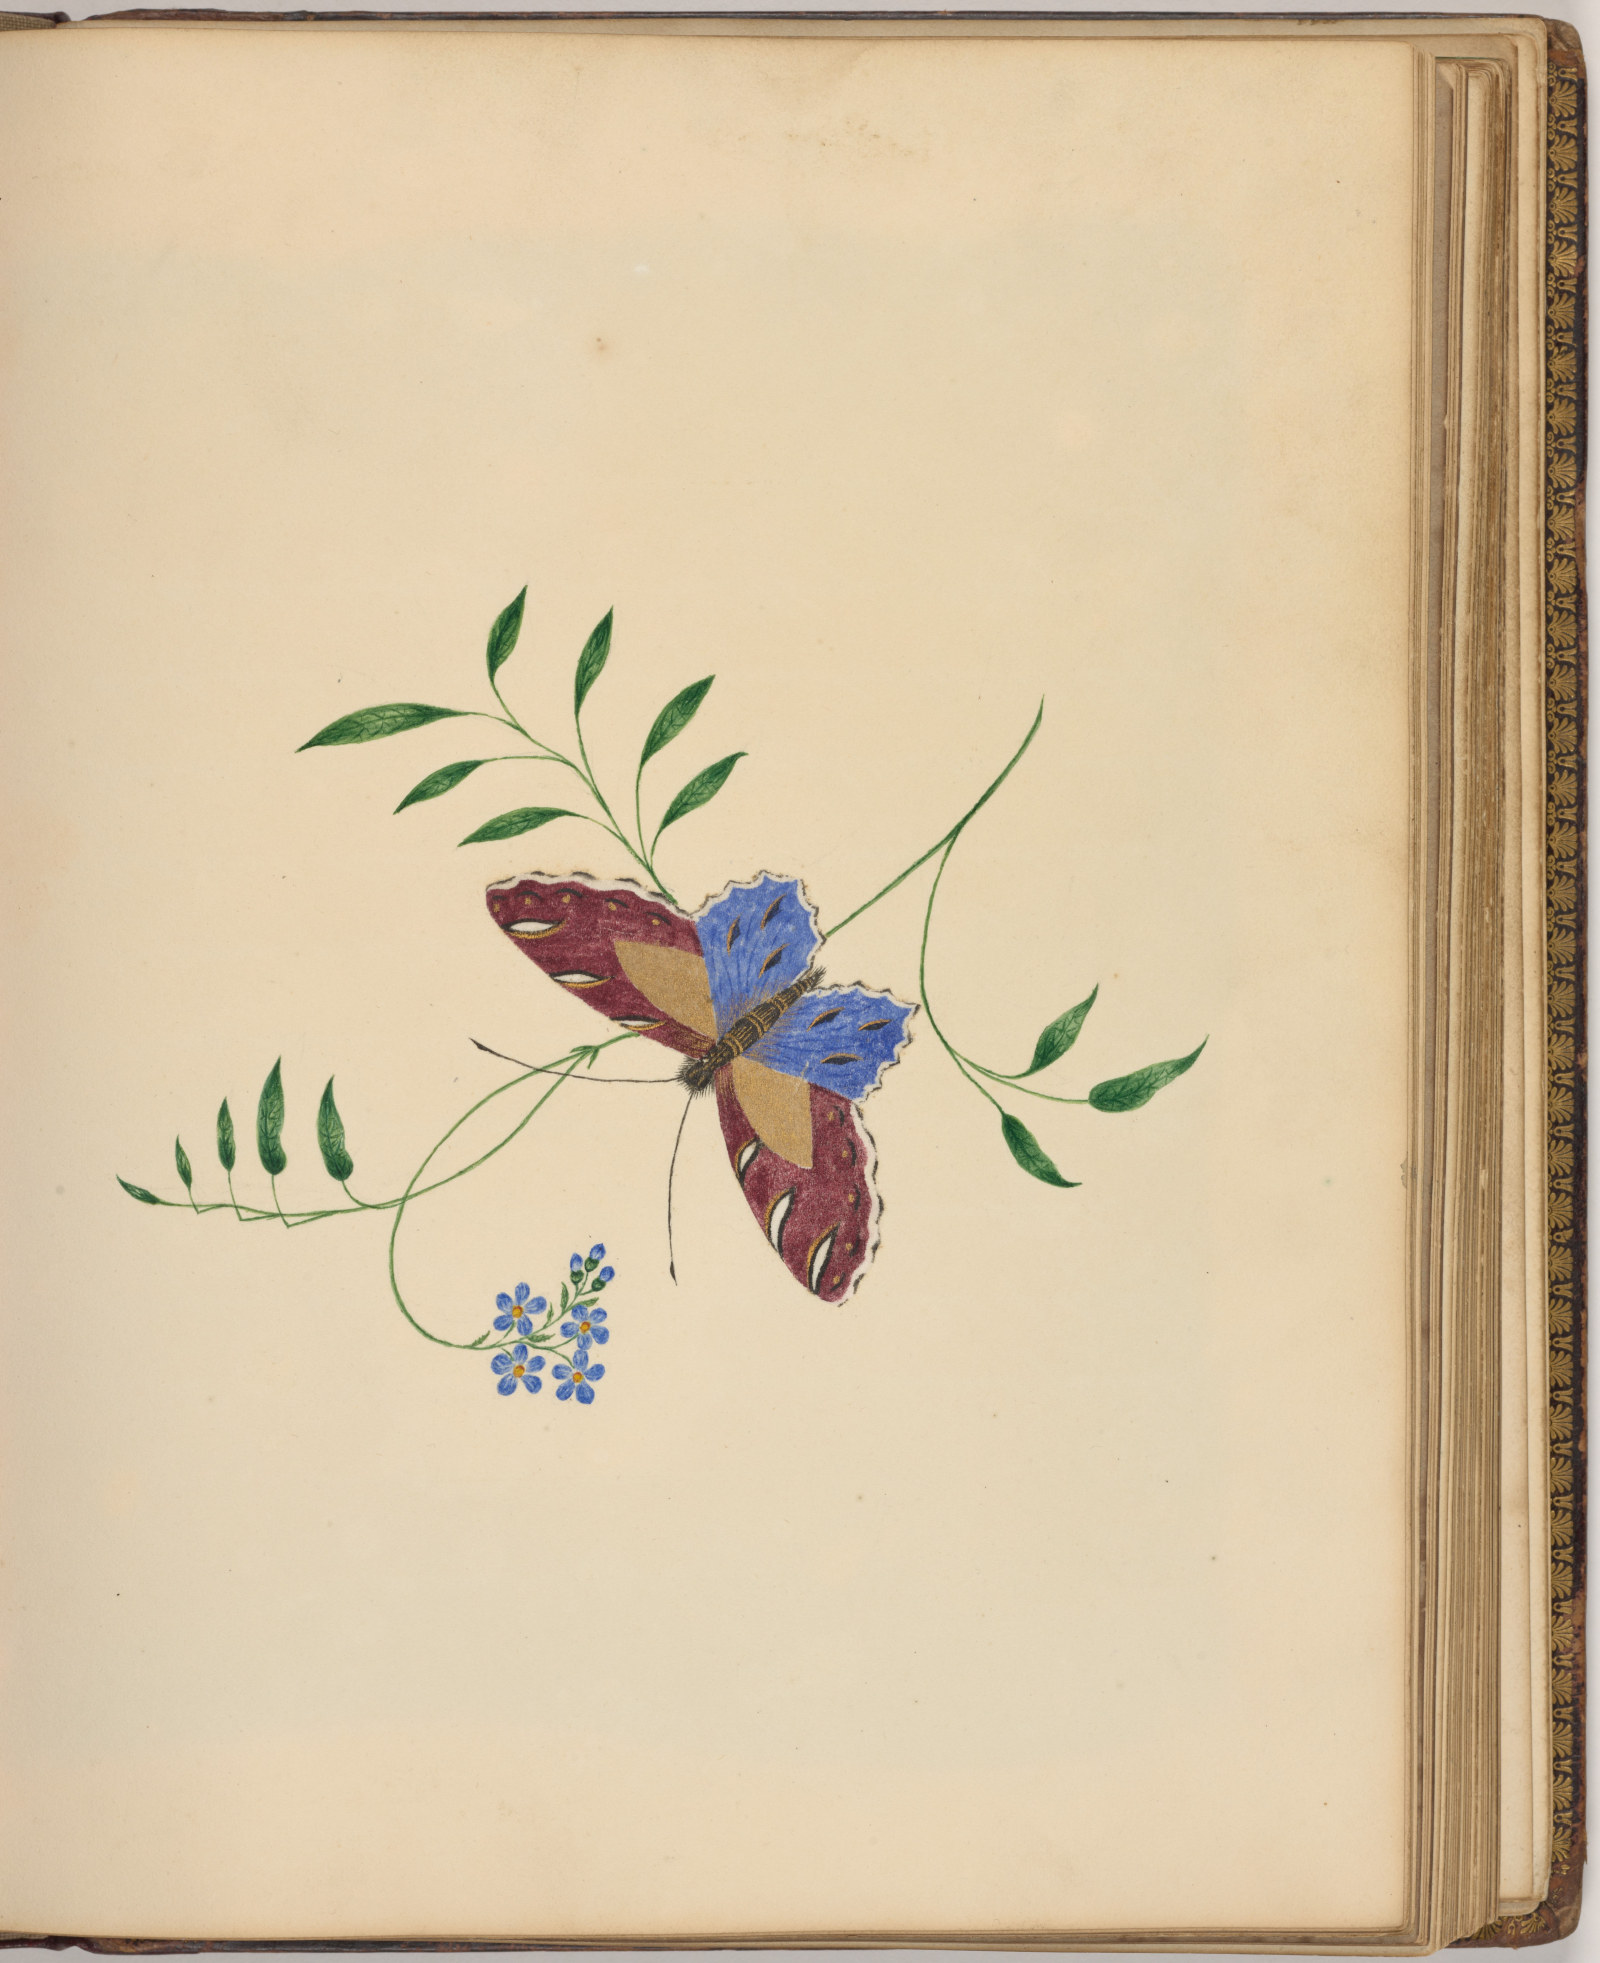 Botanical illustration of a butterfly